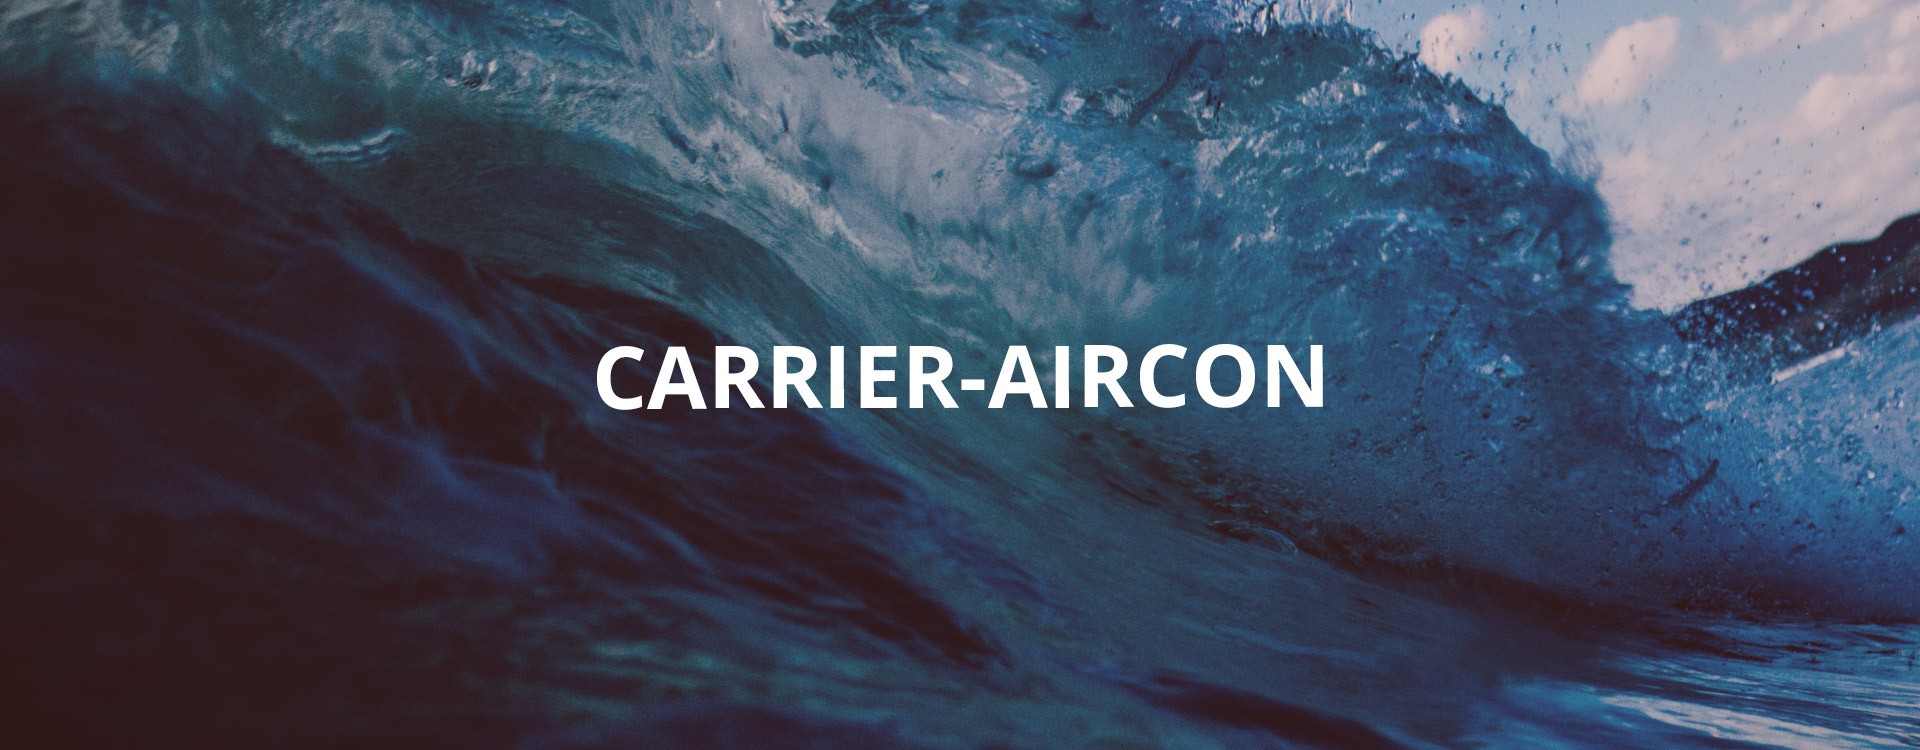 Carrier-aircon